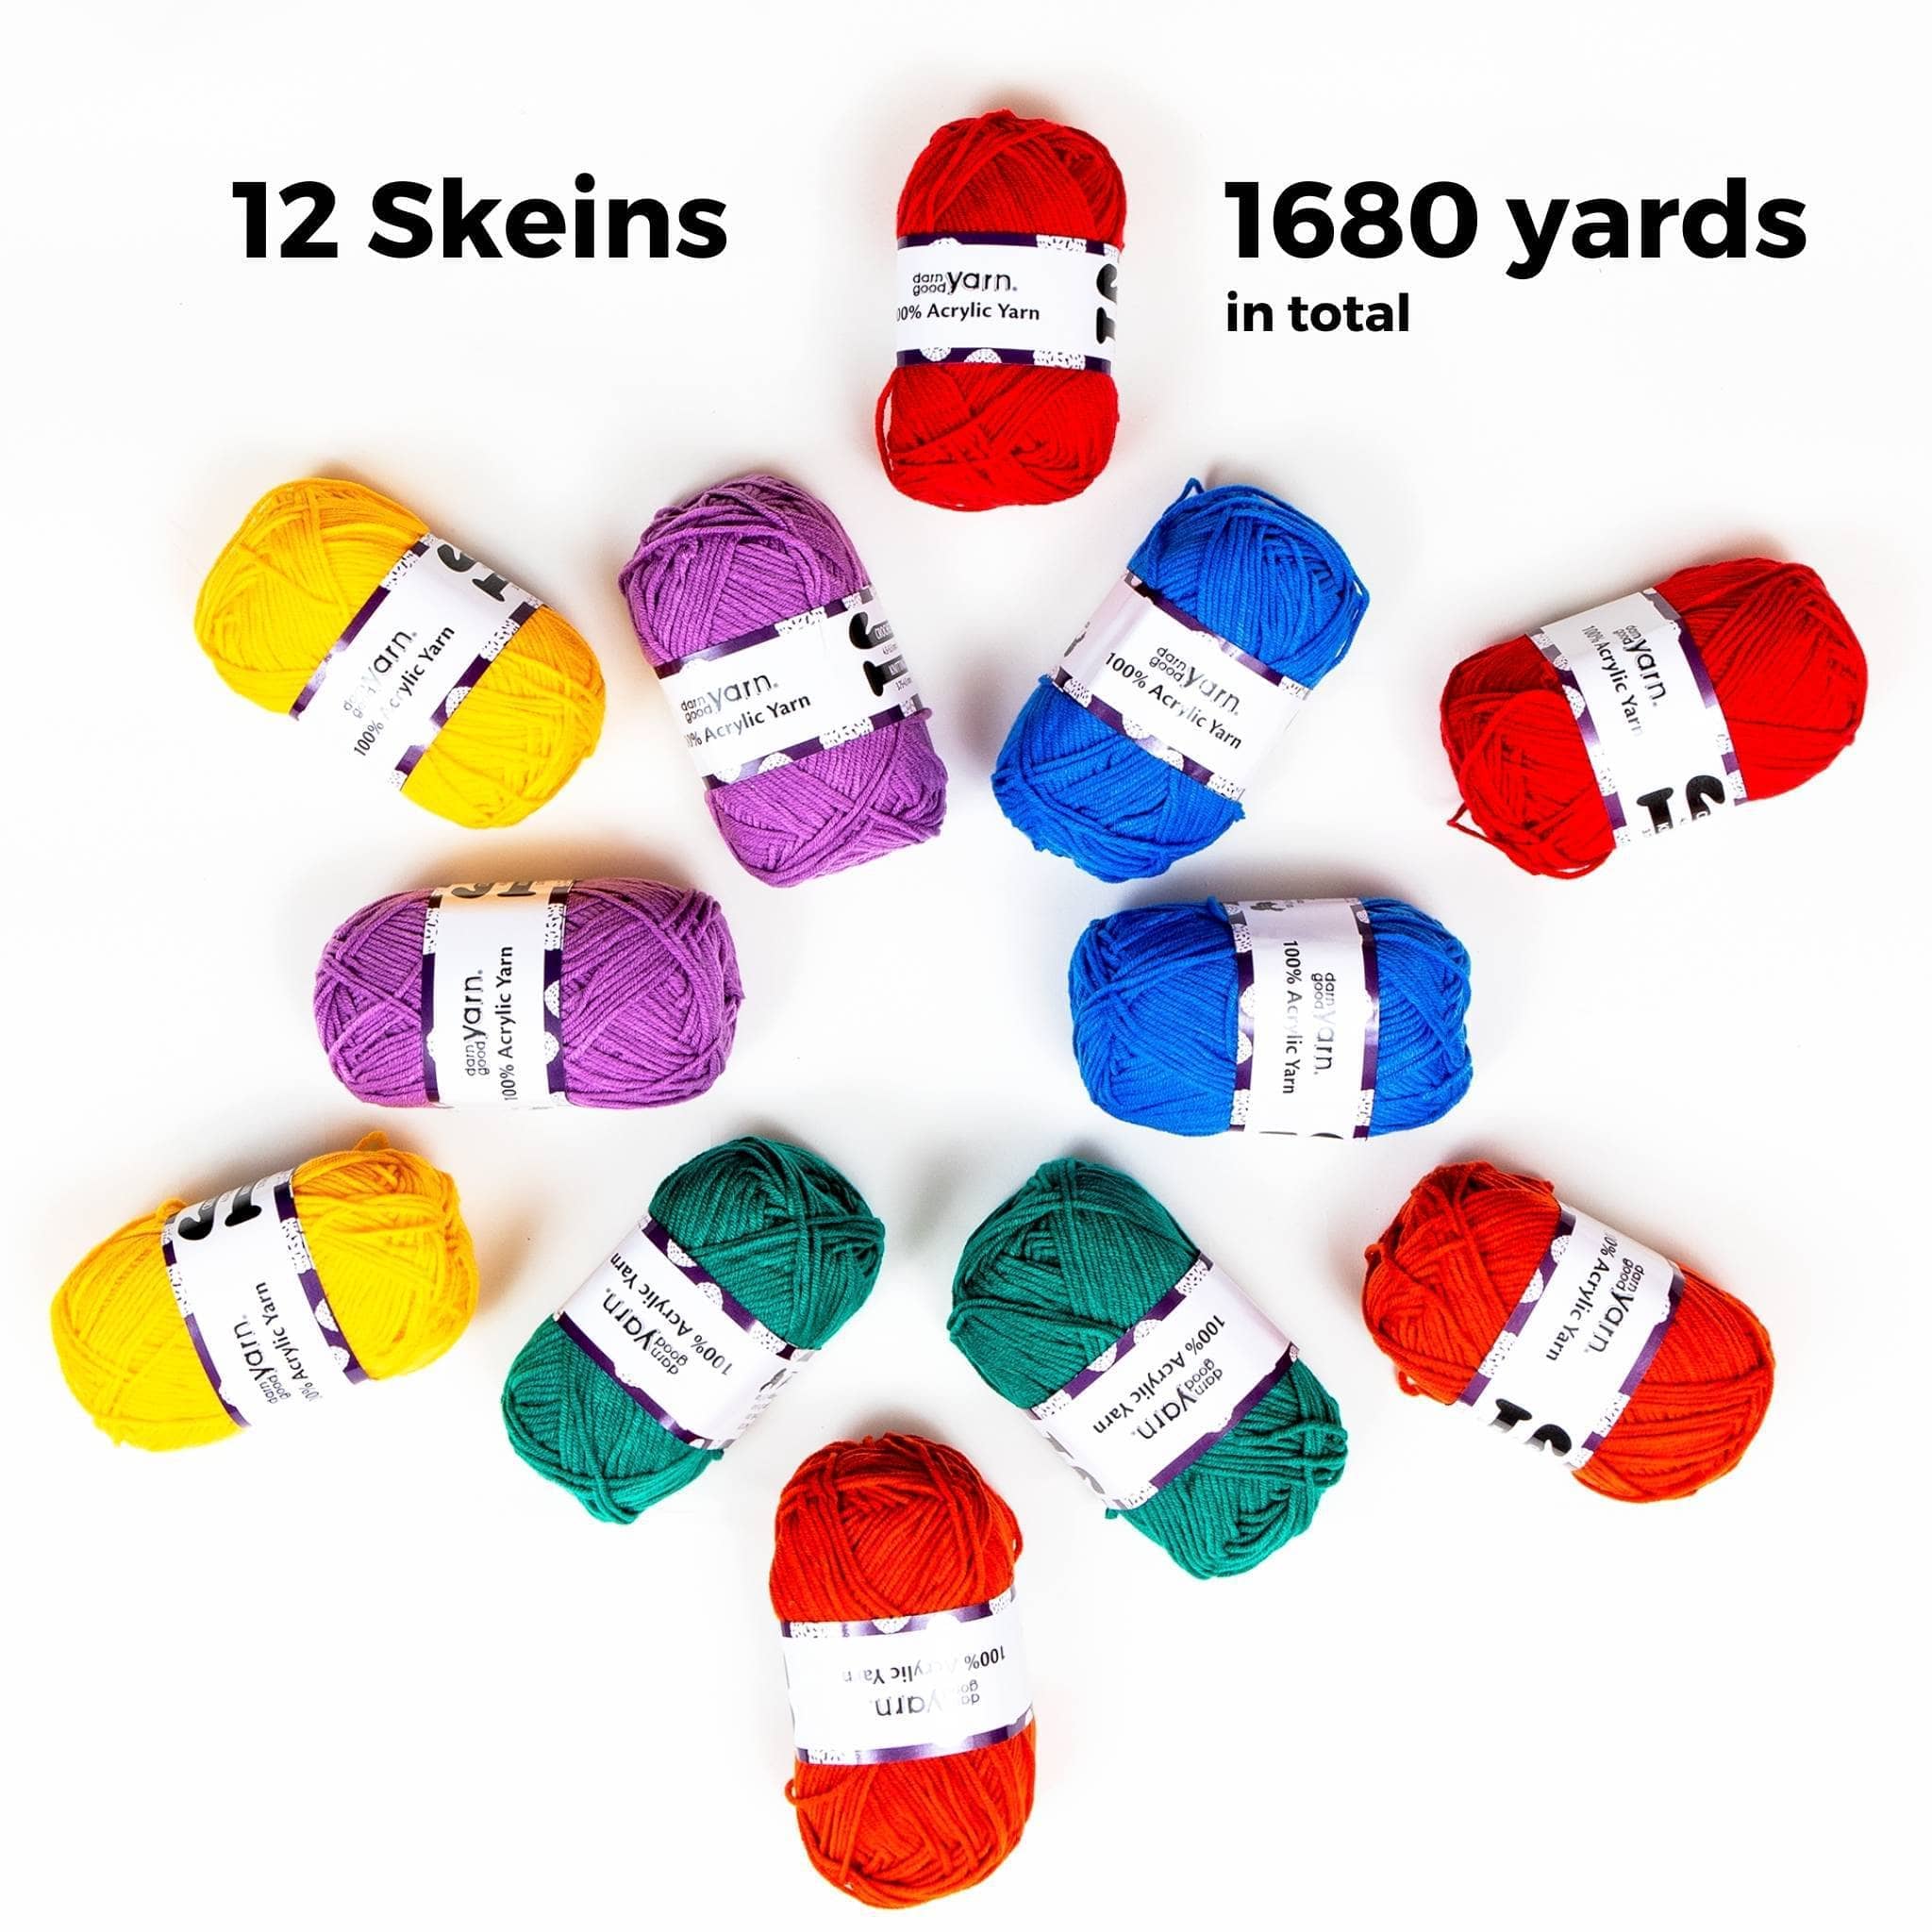 Easy Crochet Blanket Kit for Beginners - 5 Color Choices – Darn